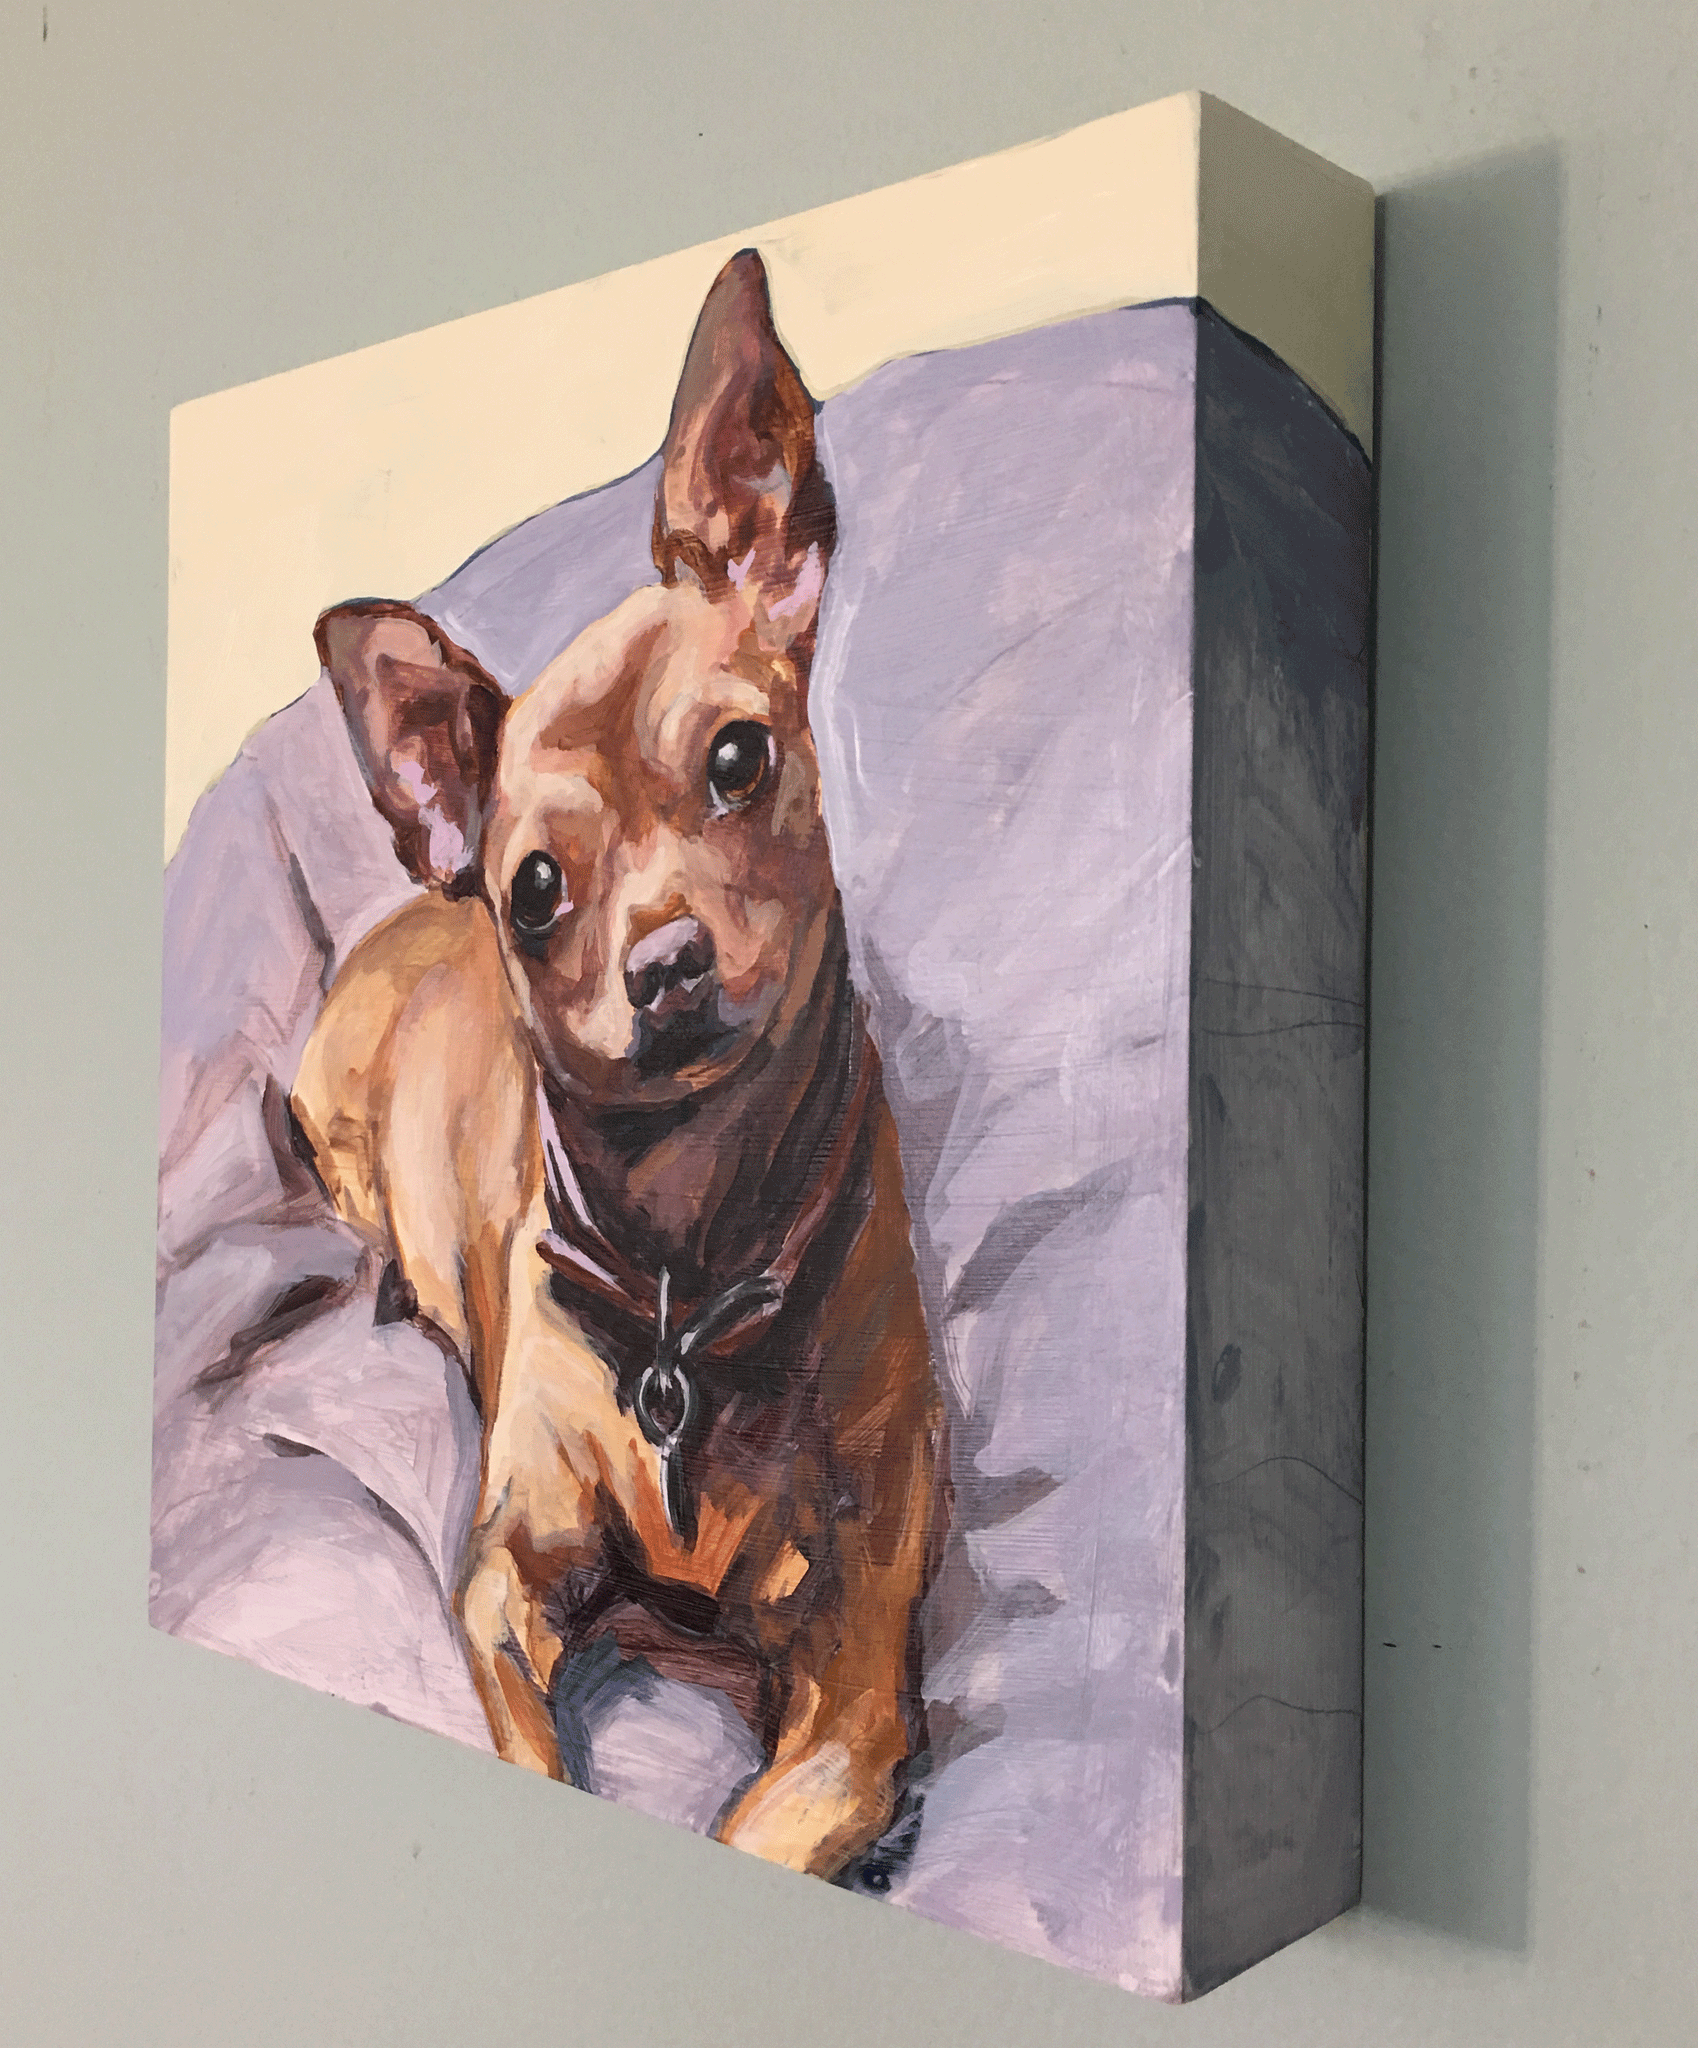 8x8 canvas--Dog with raincoat – Applecoxdesign